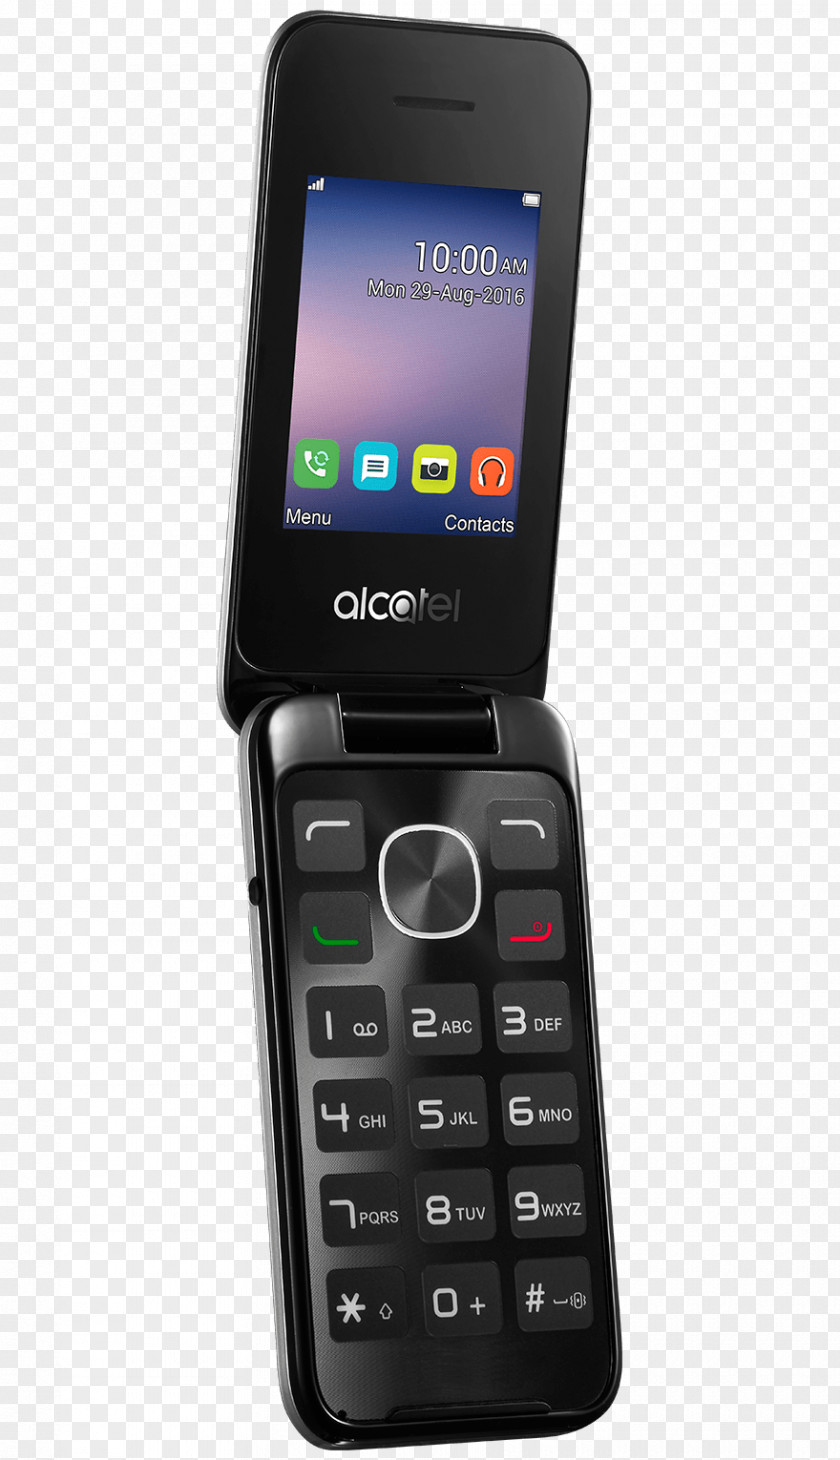 Smartphone Alcatel 2051 Mobile Dual SIM Telephone Subscriber Identity Module PNG